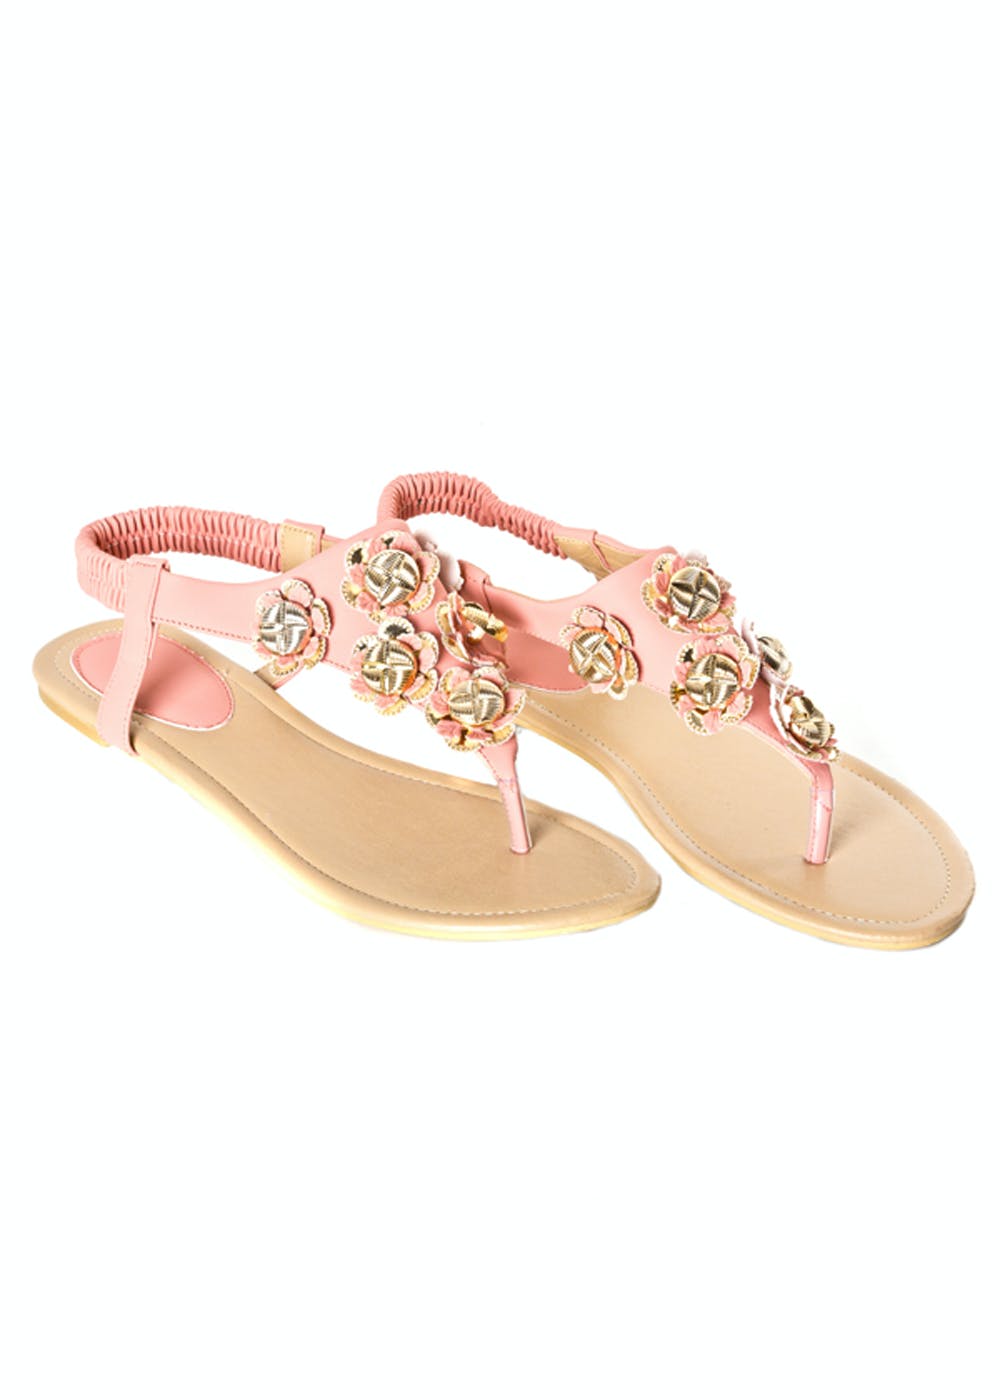 Sandals for Girls - Buy Girls Sandals online for best prices in India - AJIO-hkpdtq2012.edu.vn